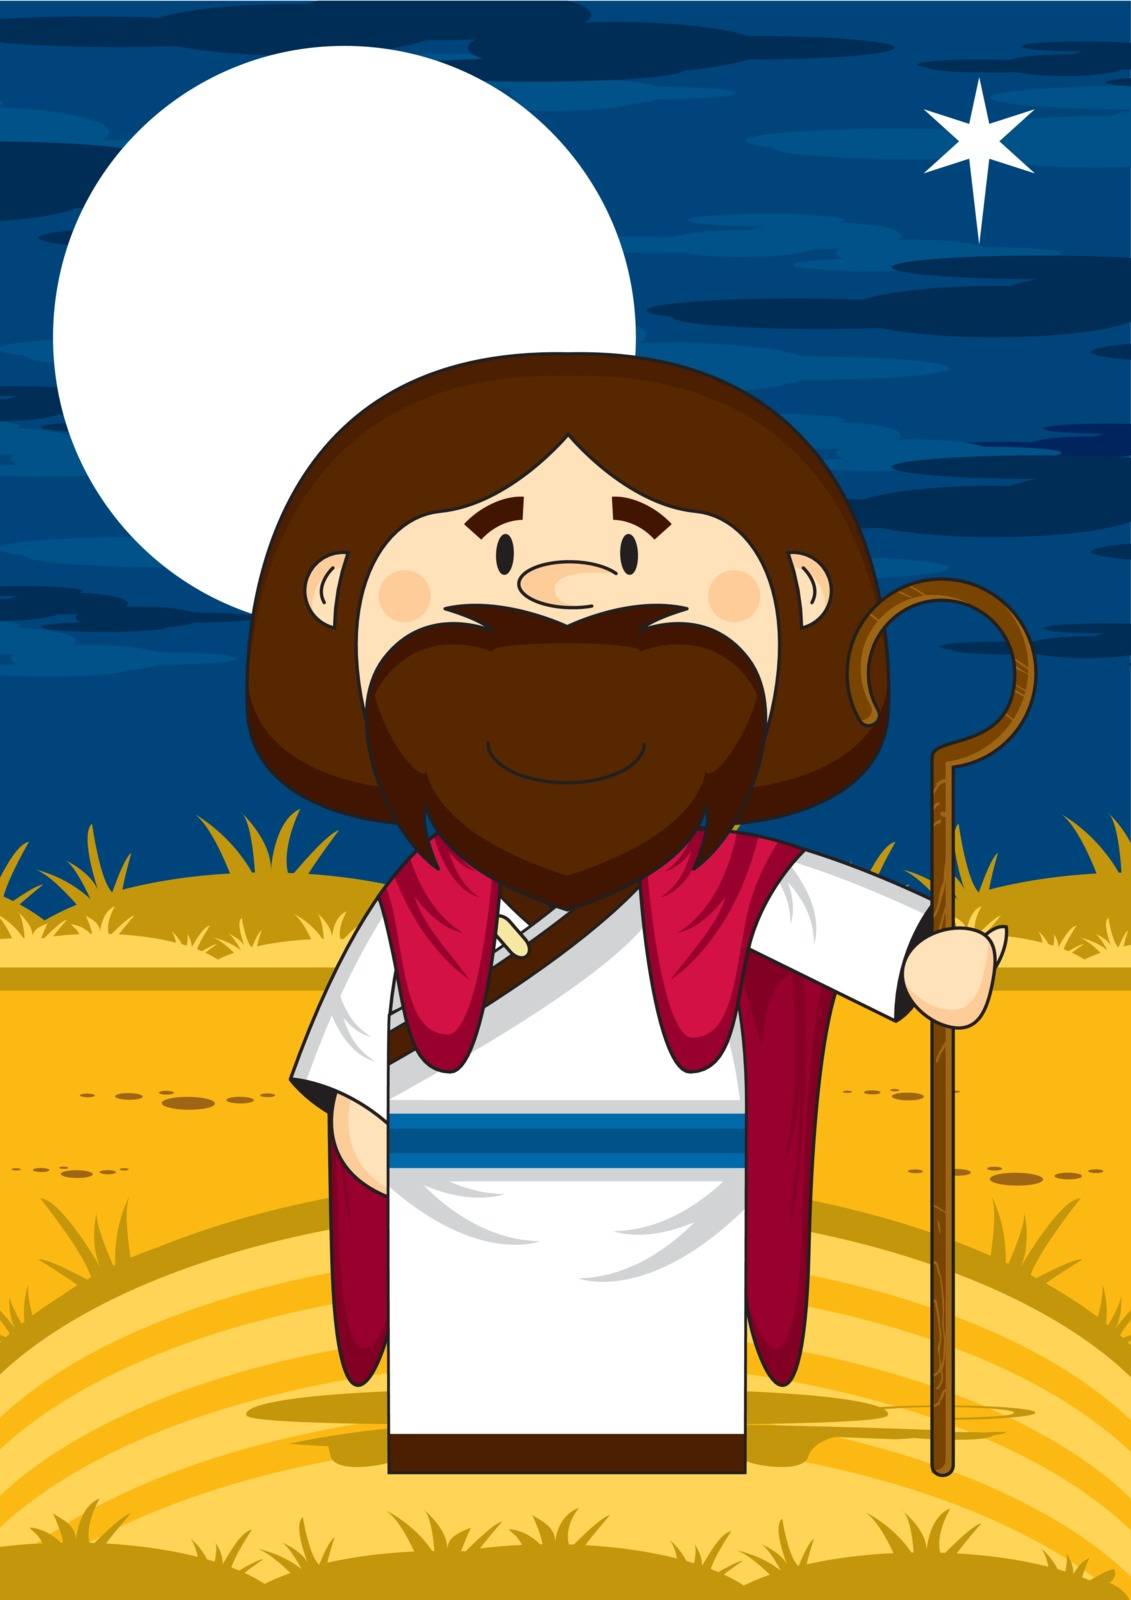 Adorably Cute Cartoon Jesus Christ by Moonlight Scene Biblical Illustration by Mark Murphy Creative